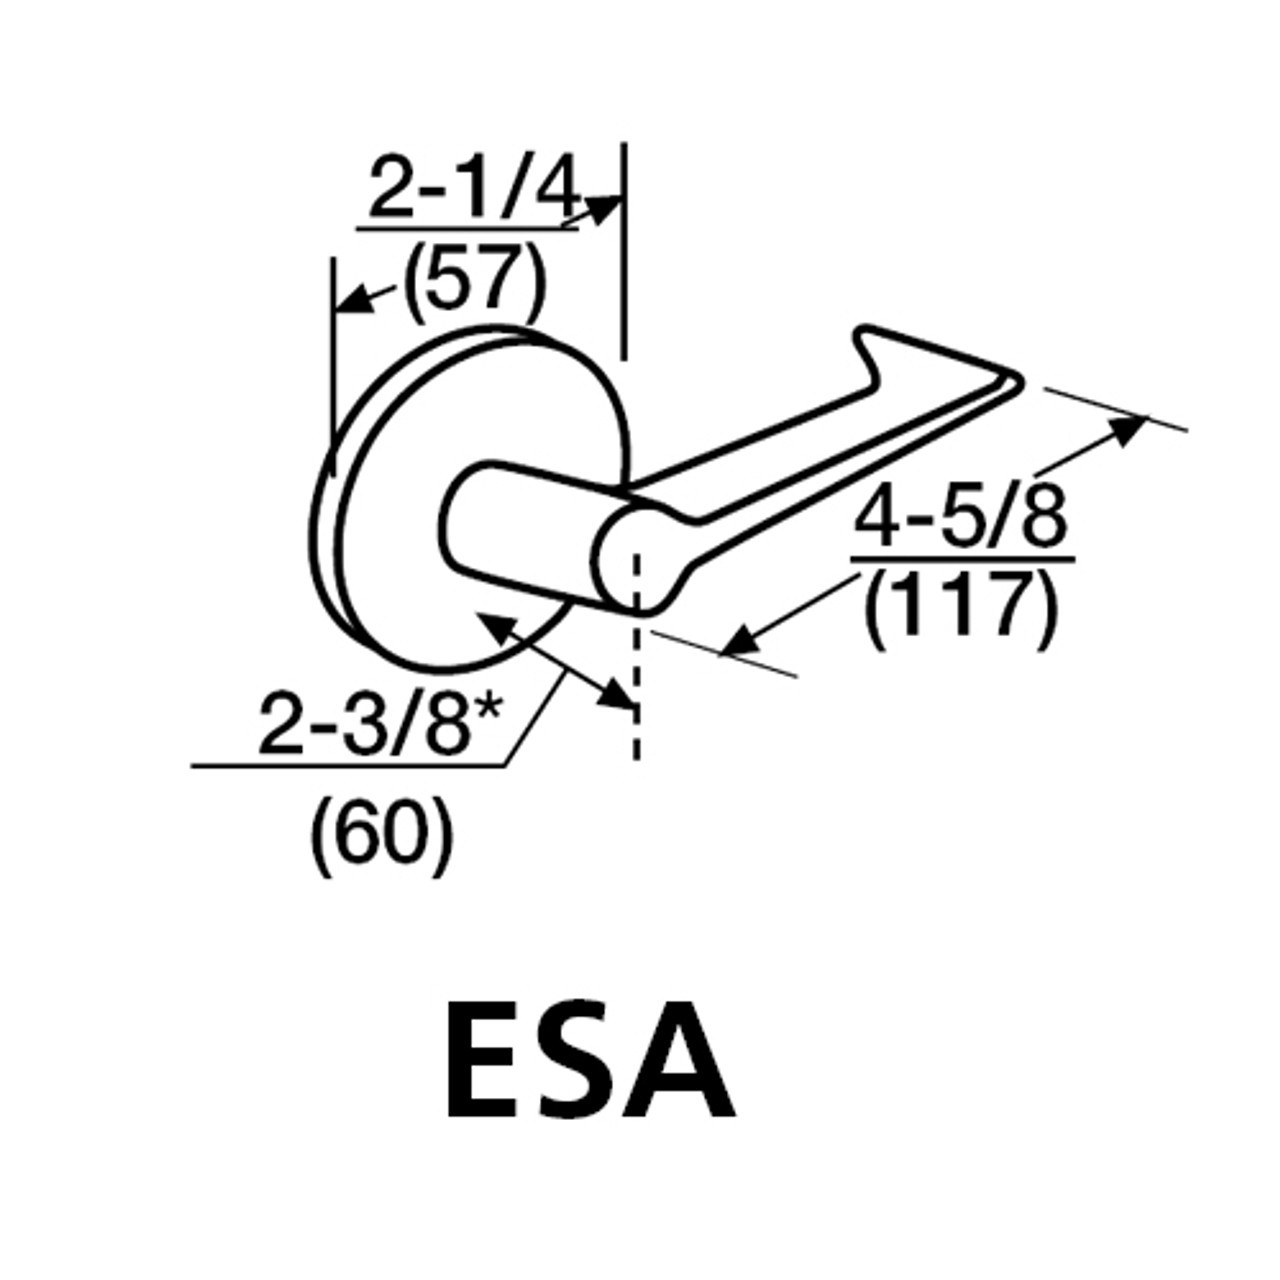 ML2053-ESA-618-LC Corbin Russwin ML2000 Series Mortise Entrance Locksets with Essex Lever in Bright Nickel